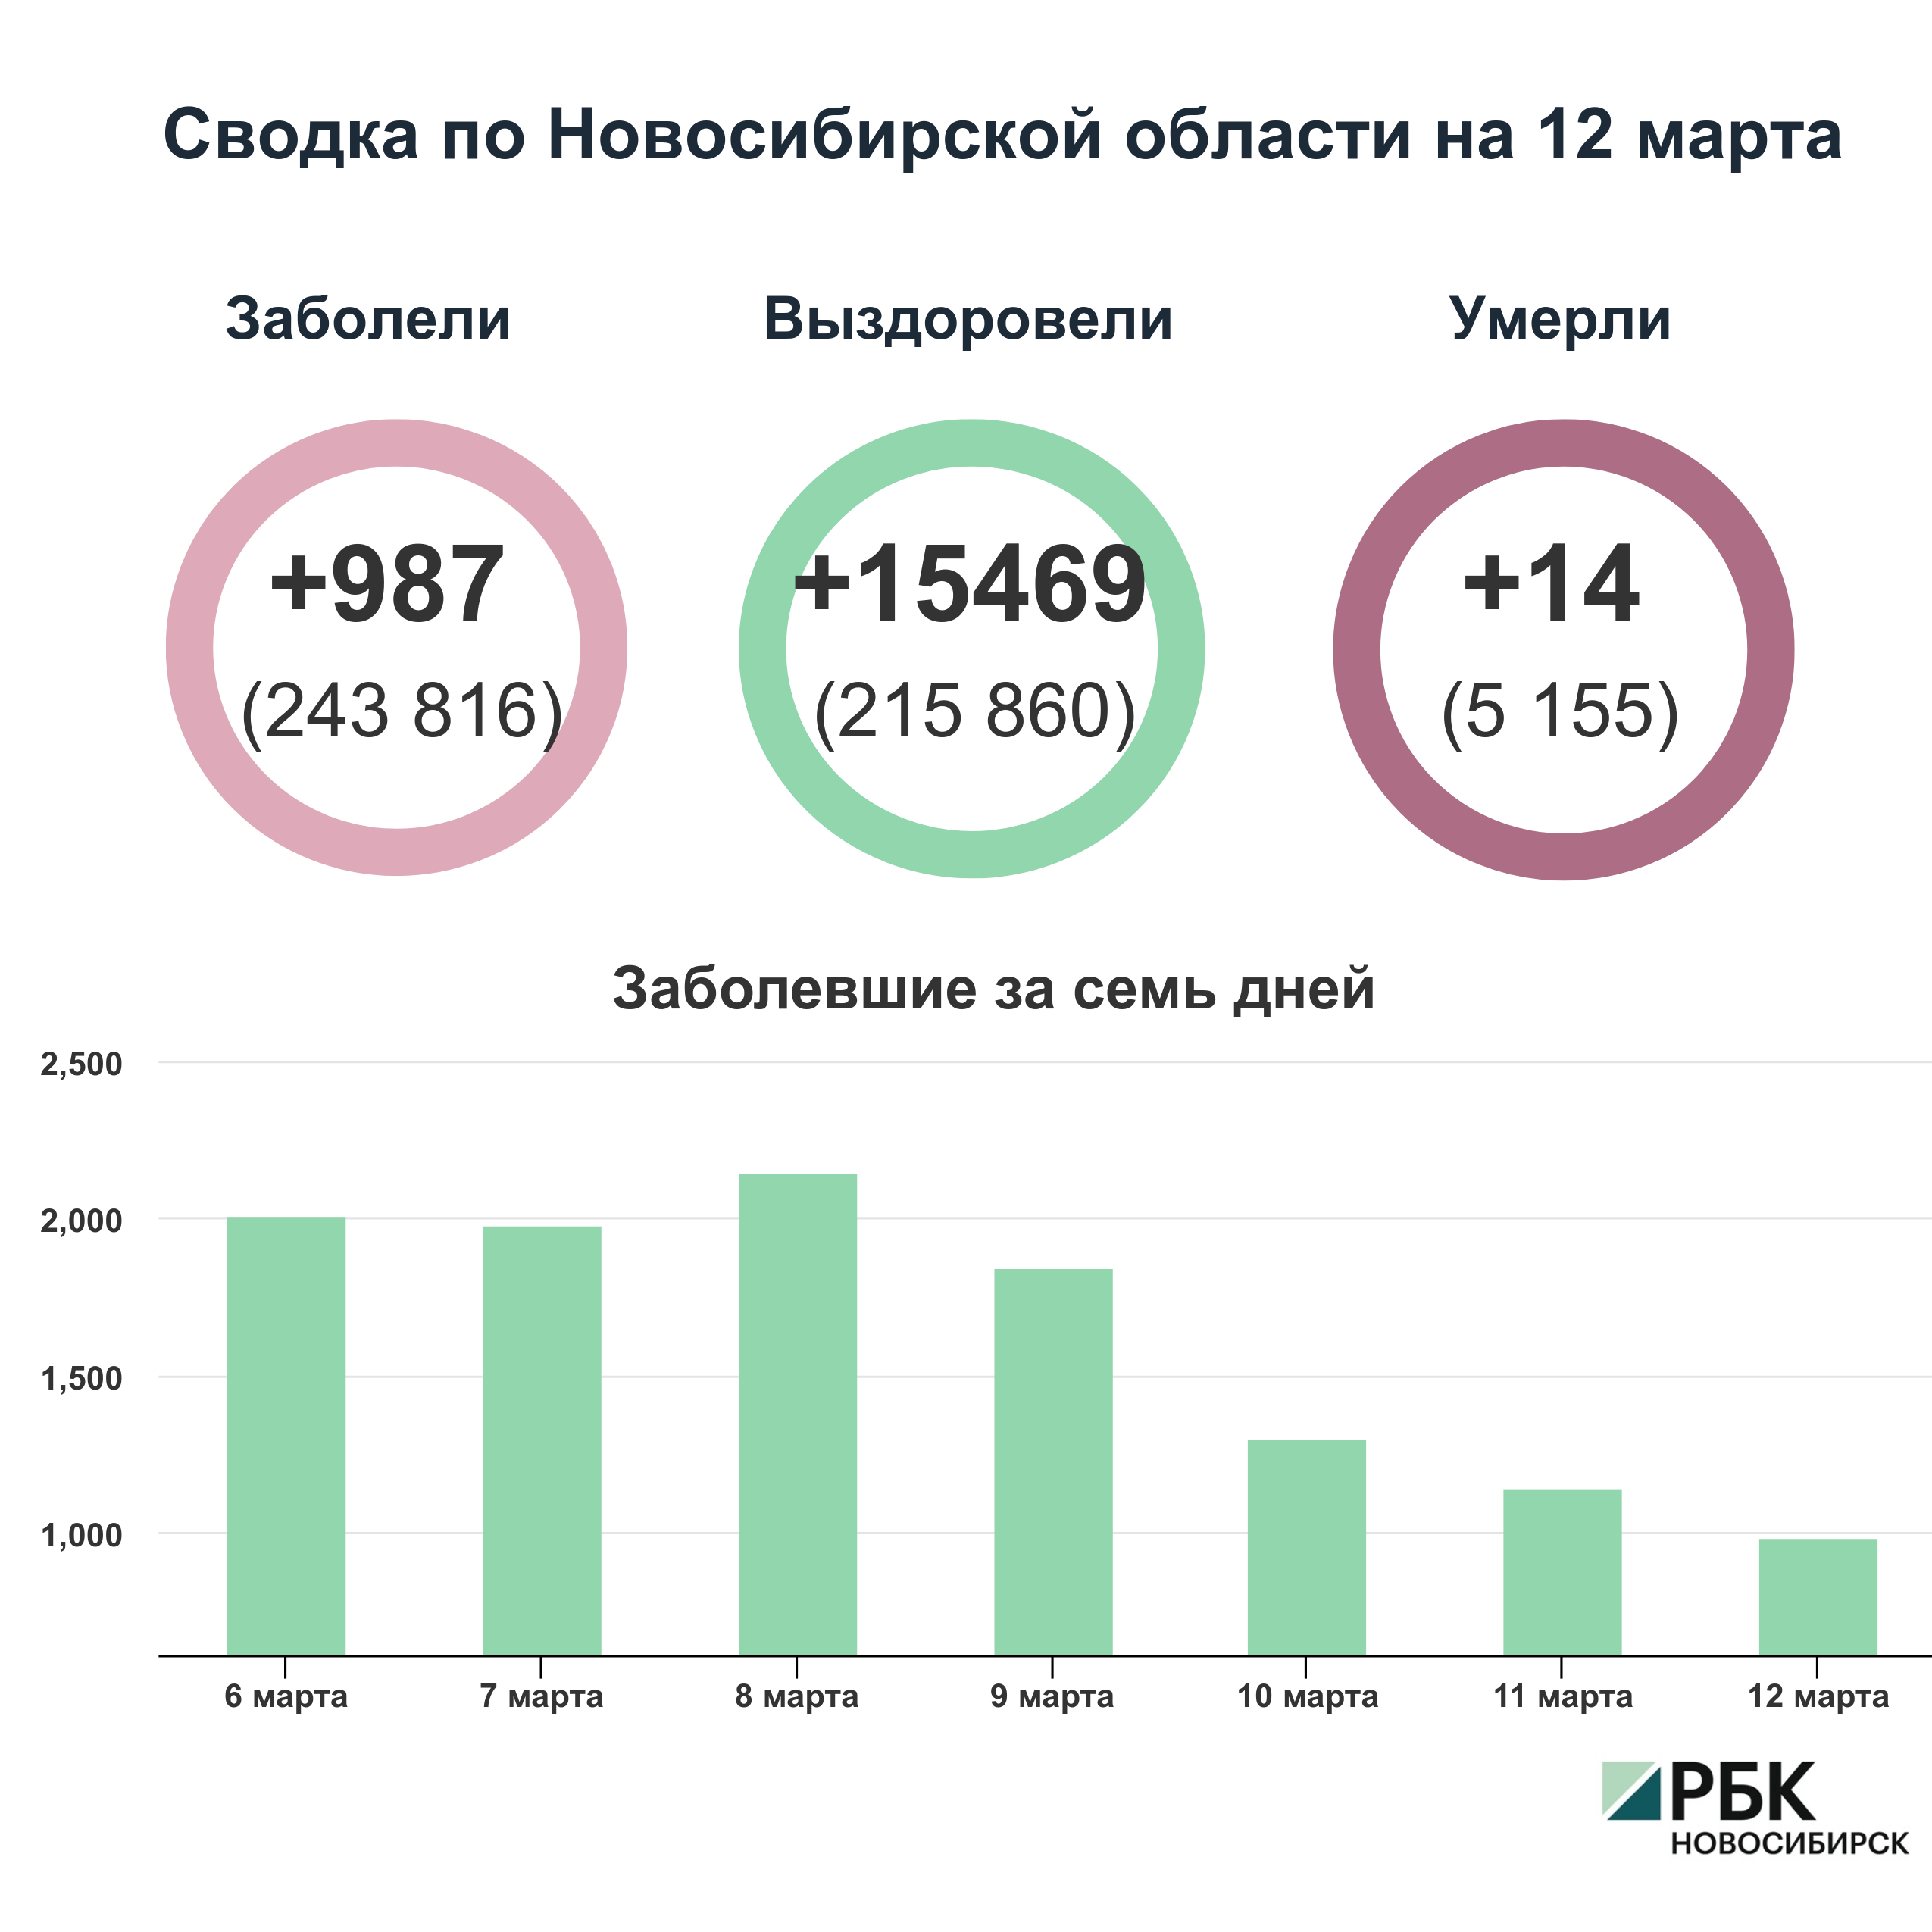 Коронавирус в Новосибирске: сводка на 12 марта